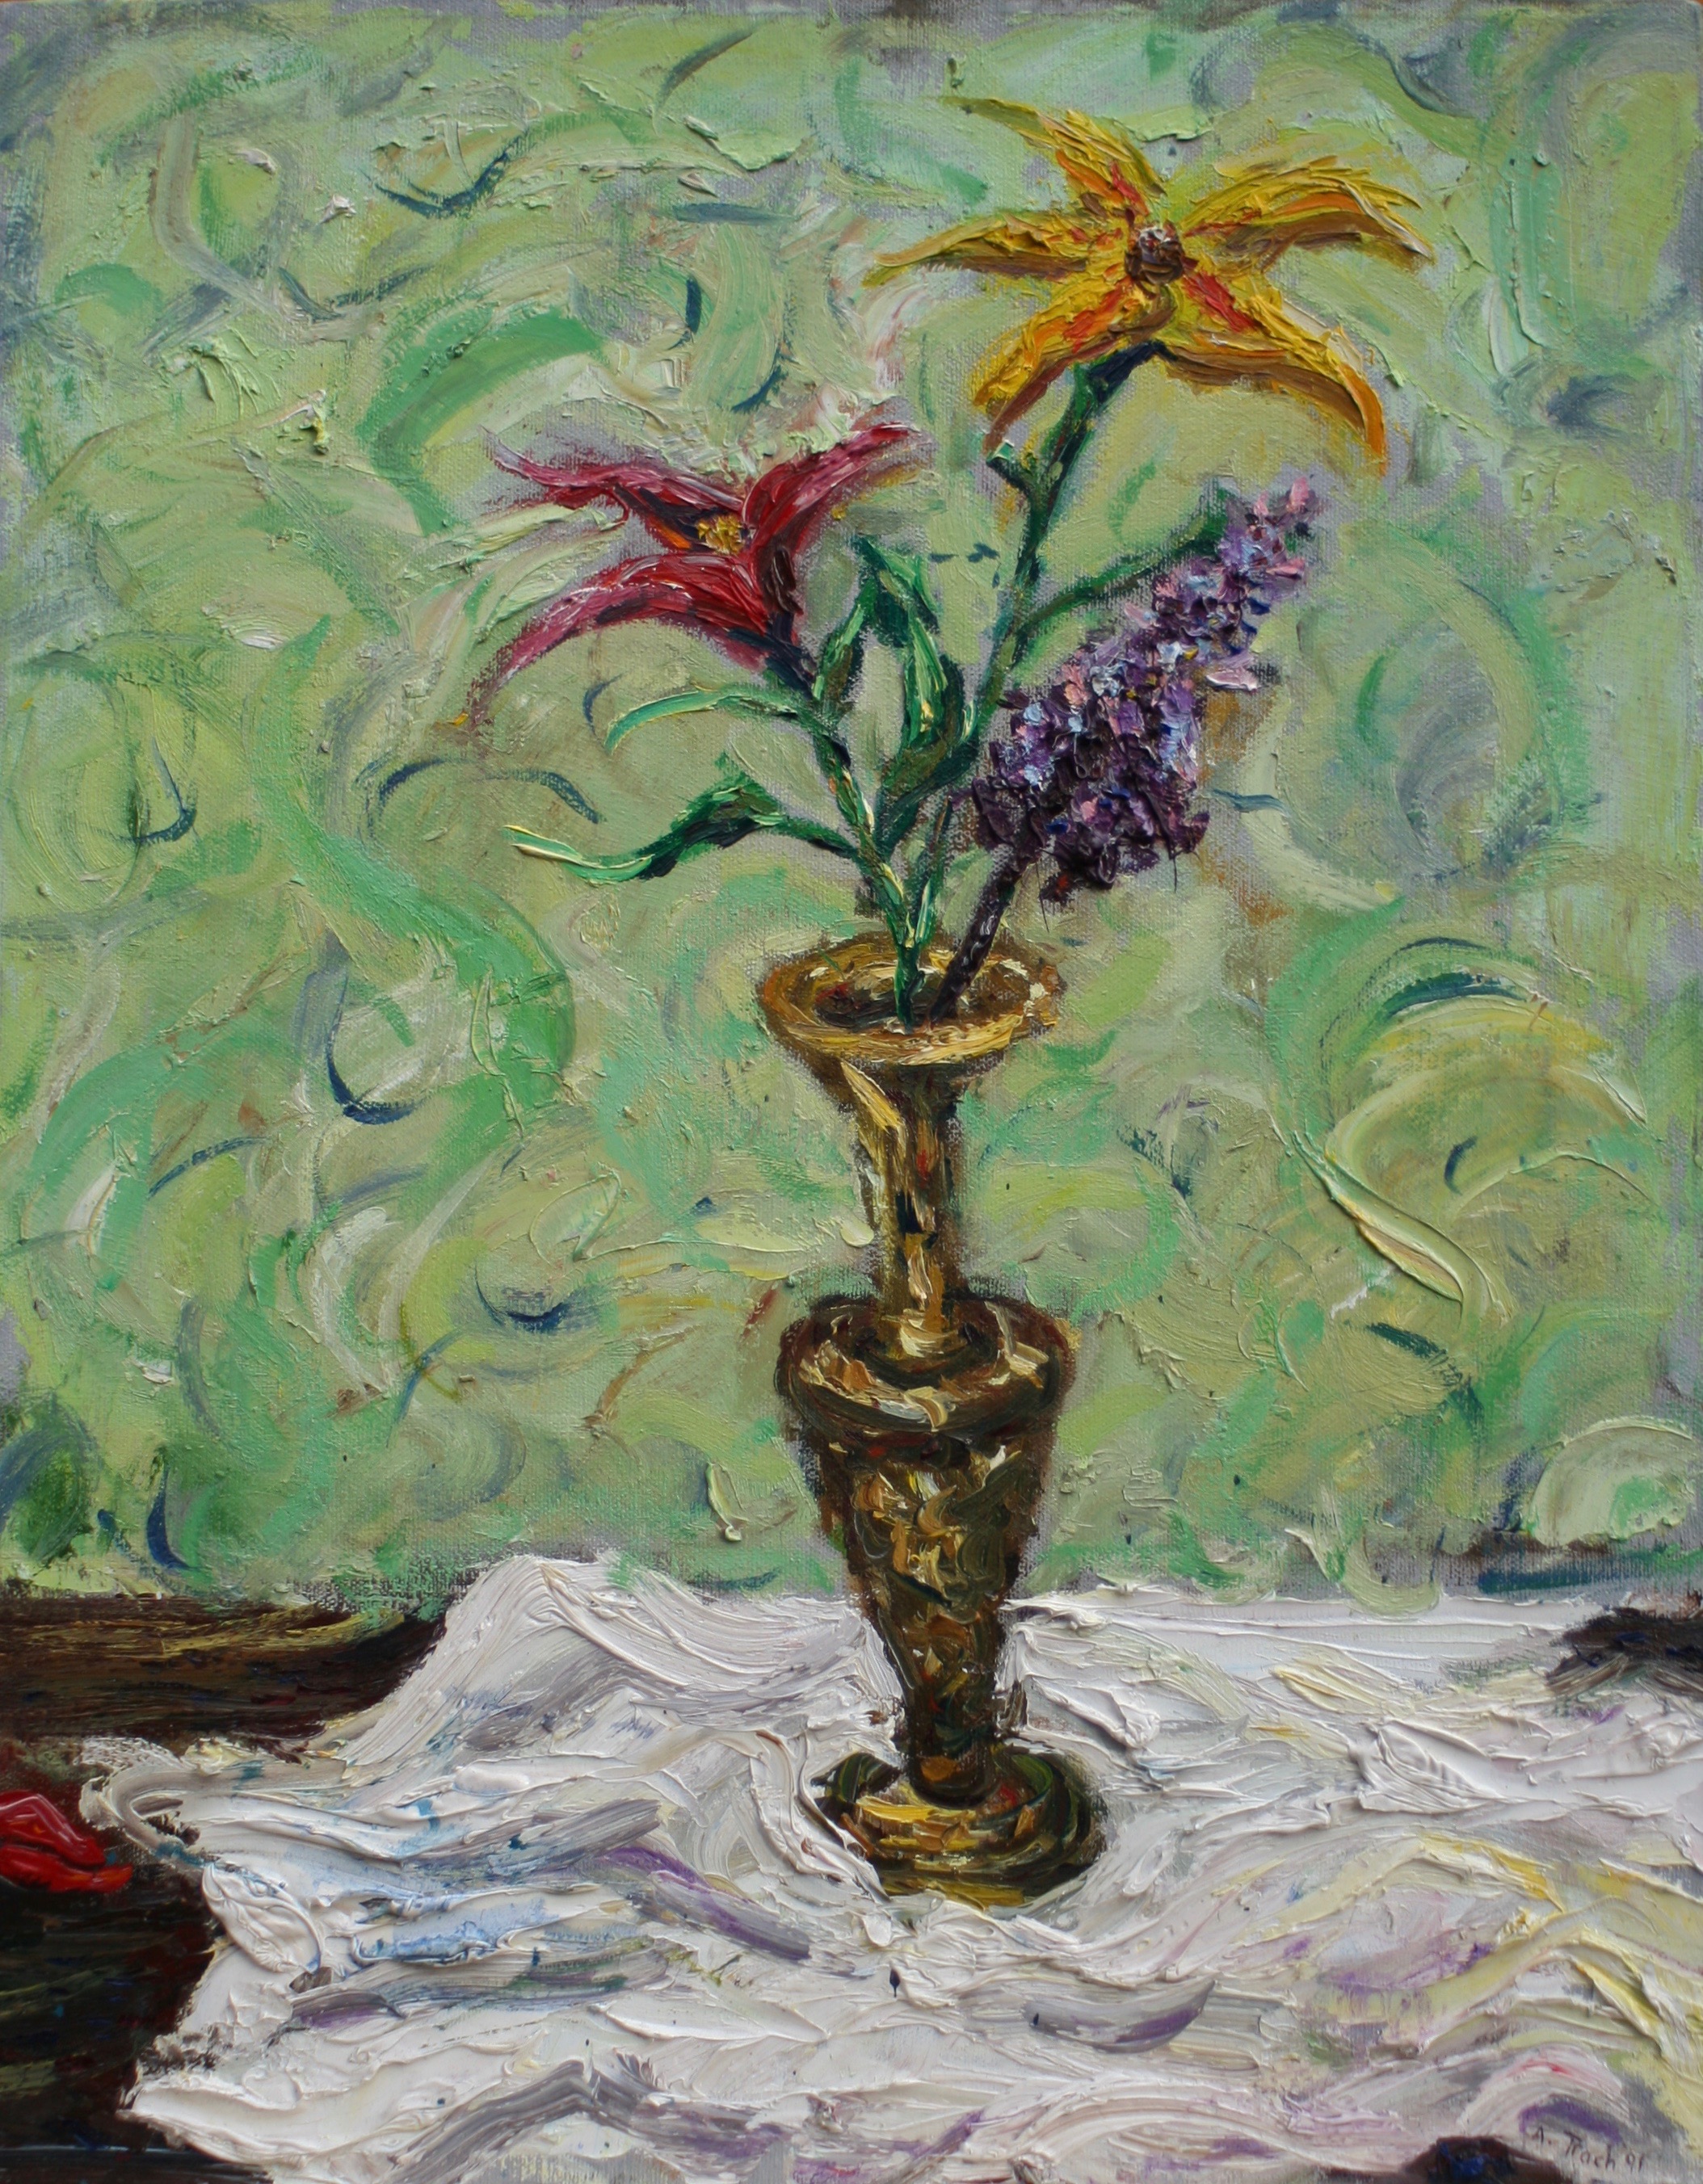 Flower Vase 20"x16" oil on canvas  1992